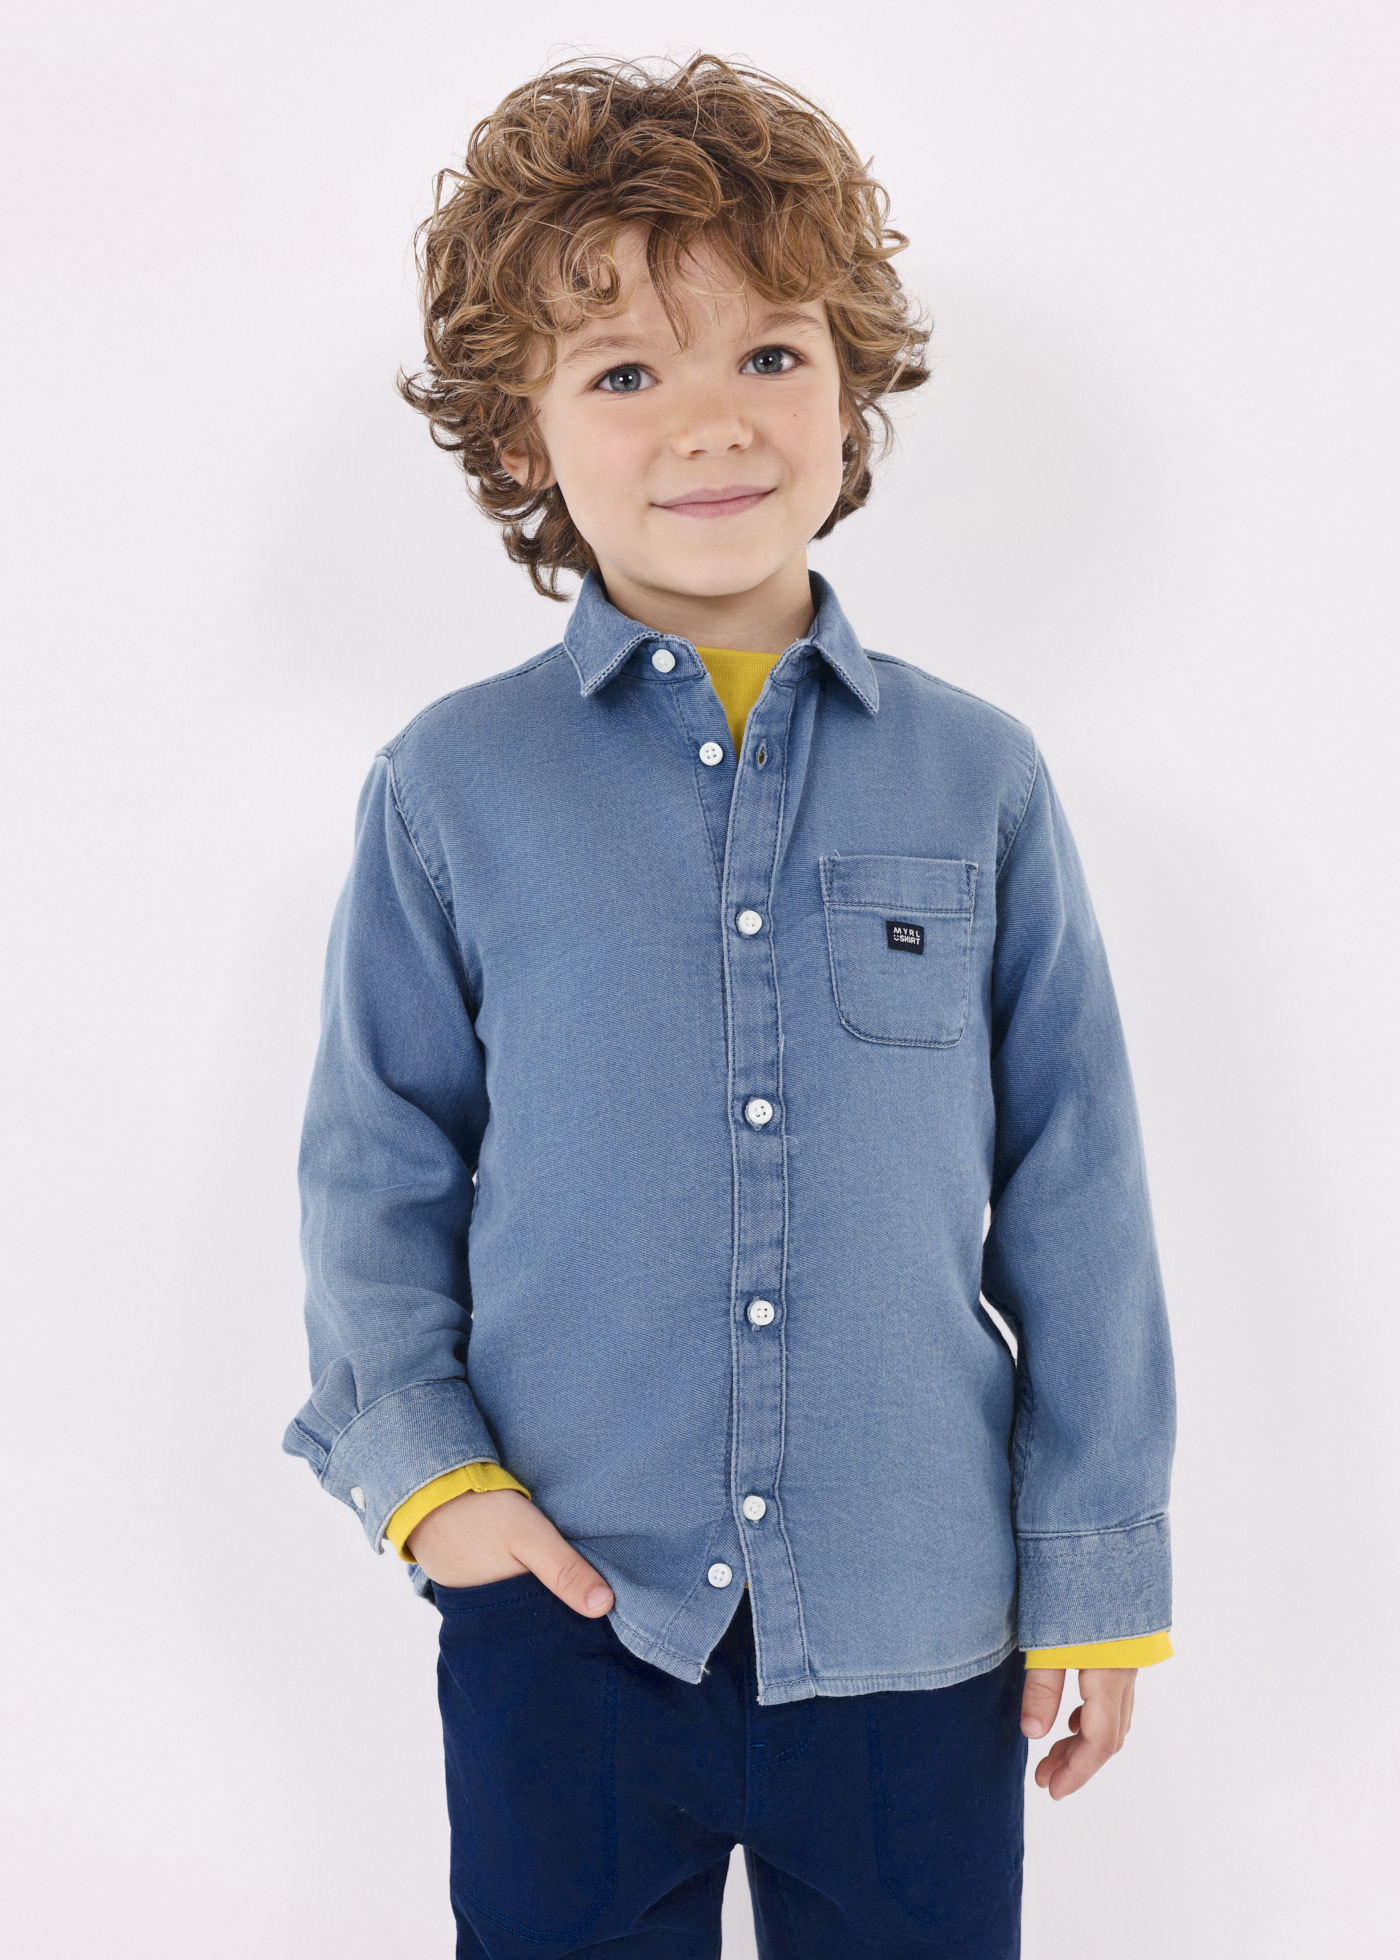 Buy Kids Dress Tshirt Denim Jacket Jeans for Boys Girls (1-2 Years) at  Amazon.in